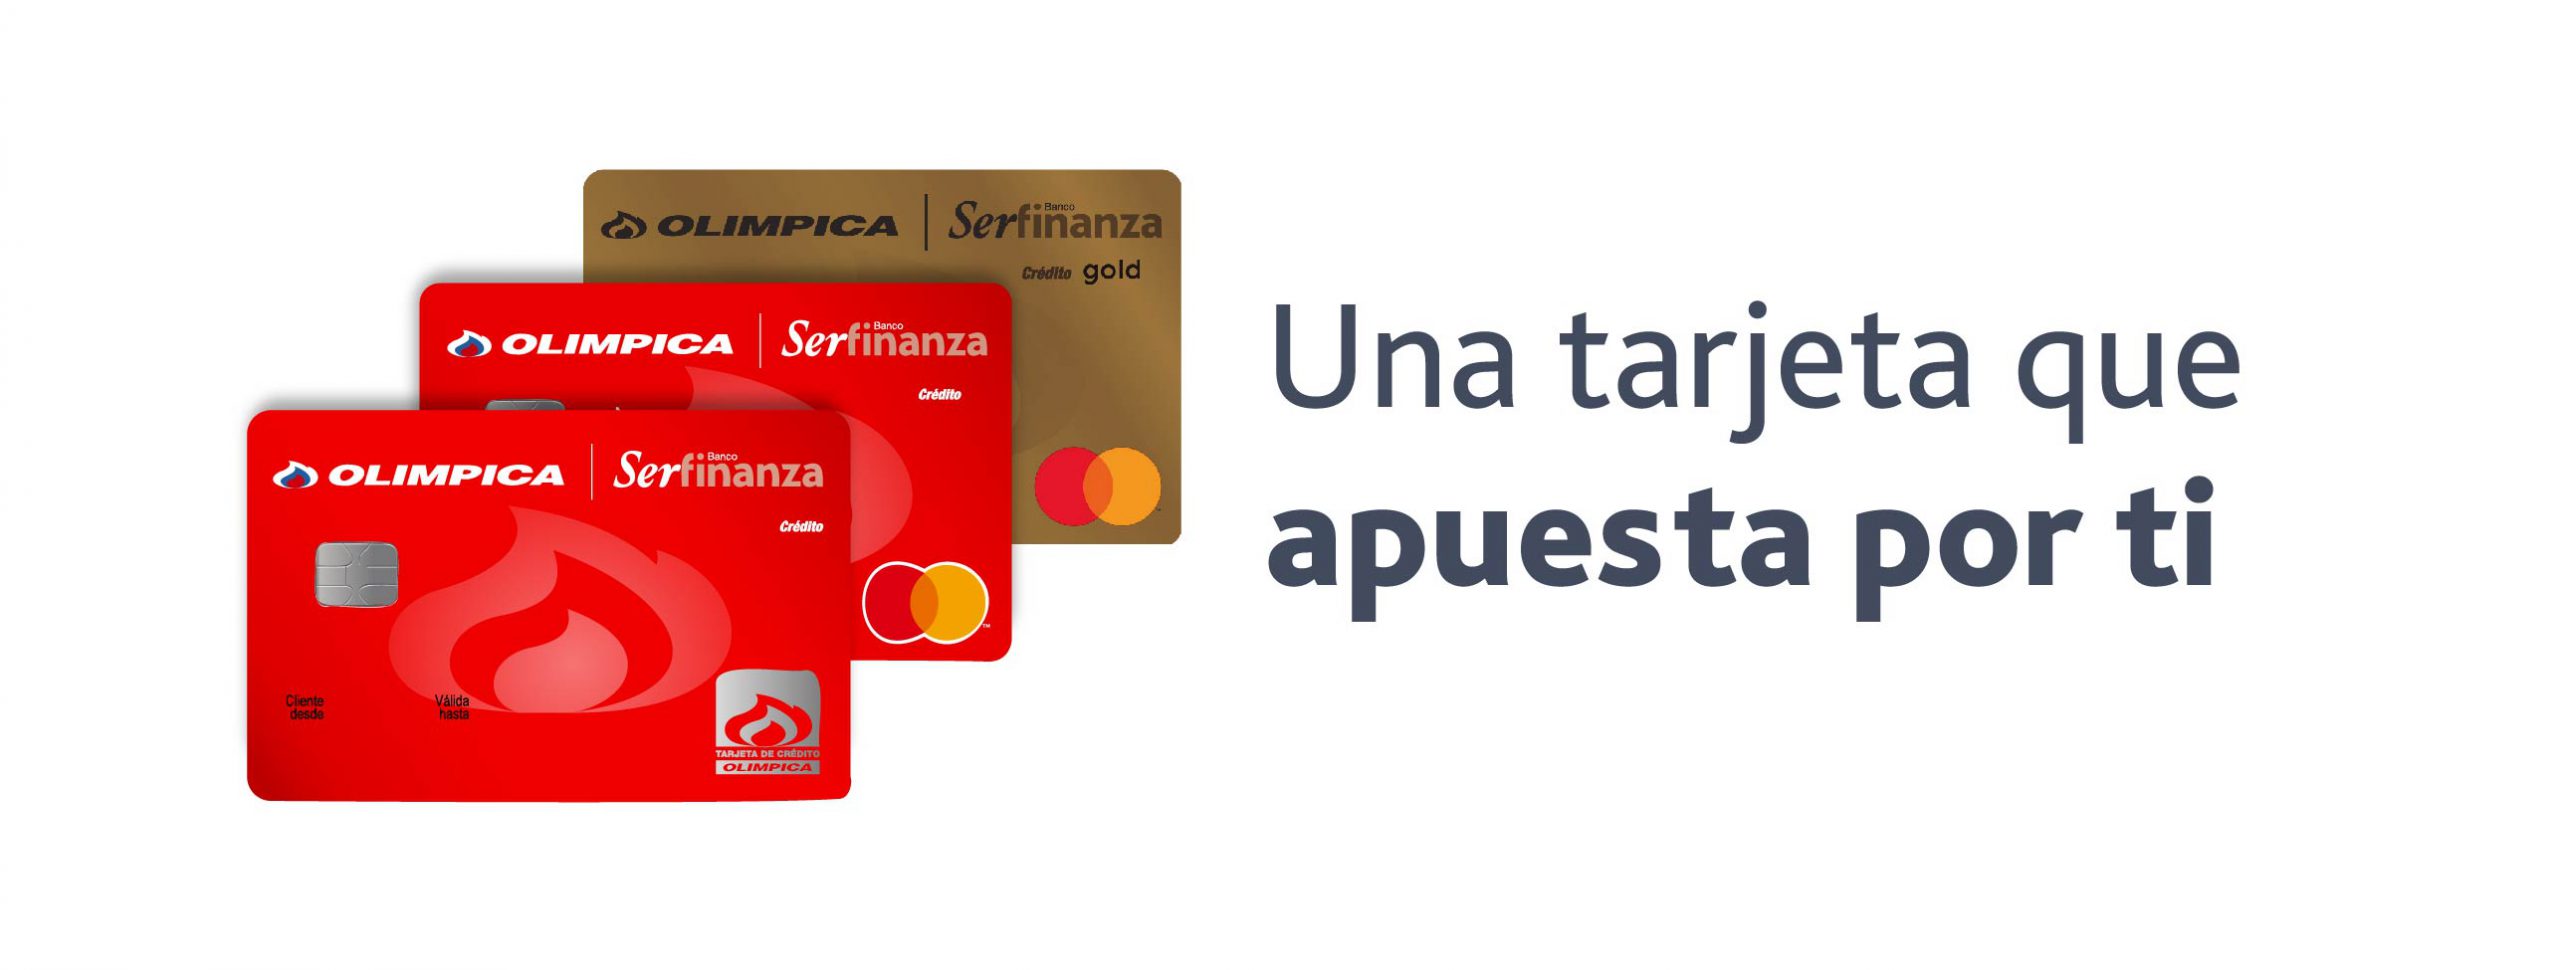 Tarjeta De Credito Olímpica Banco Serfinansa 0528